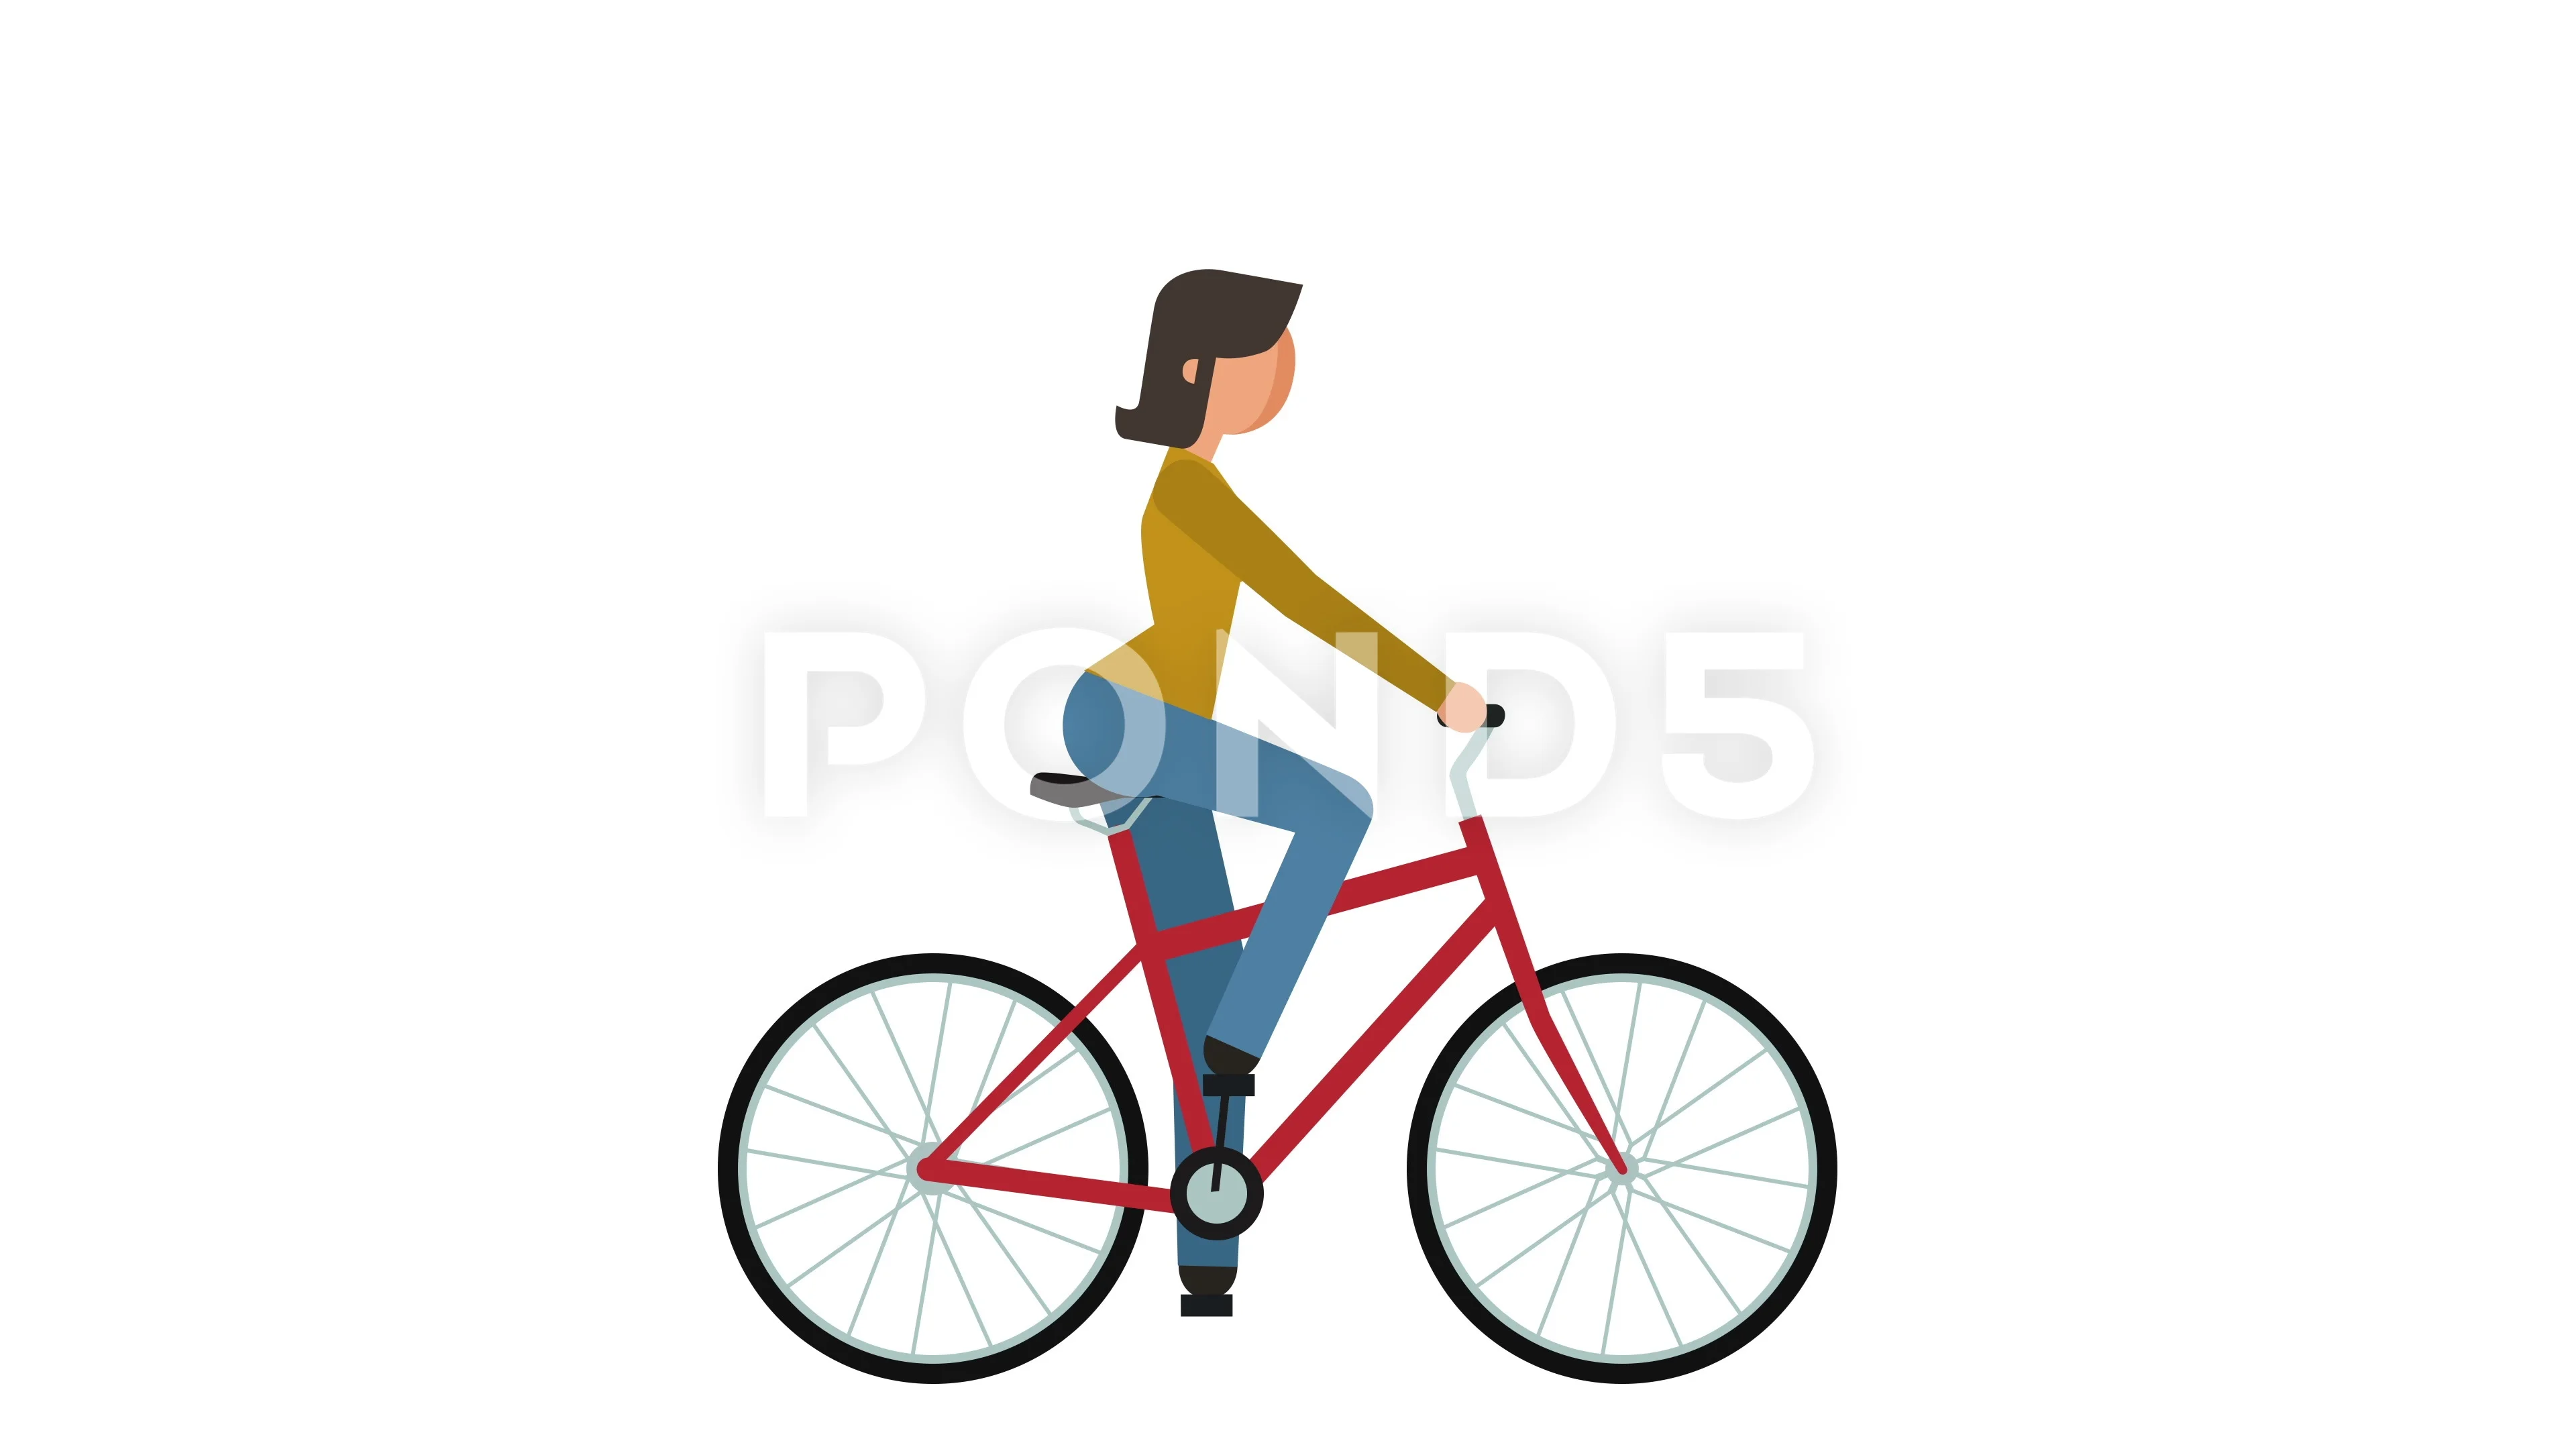 stick figure bicycle